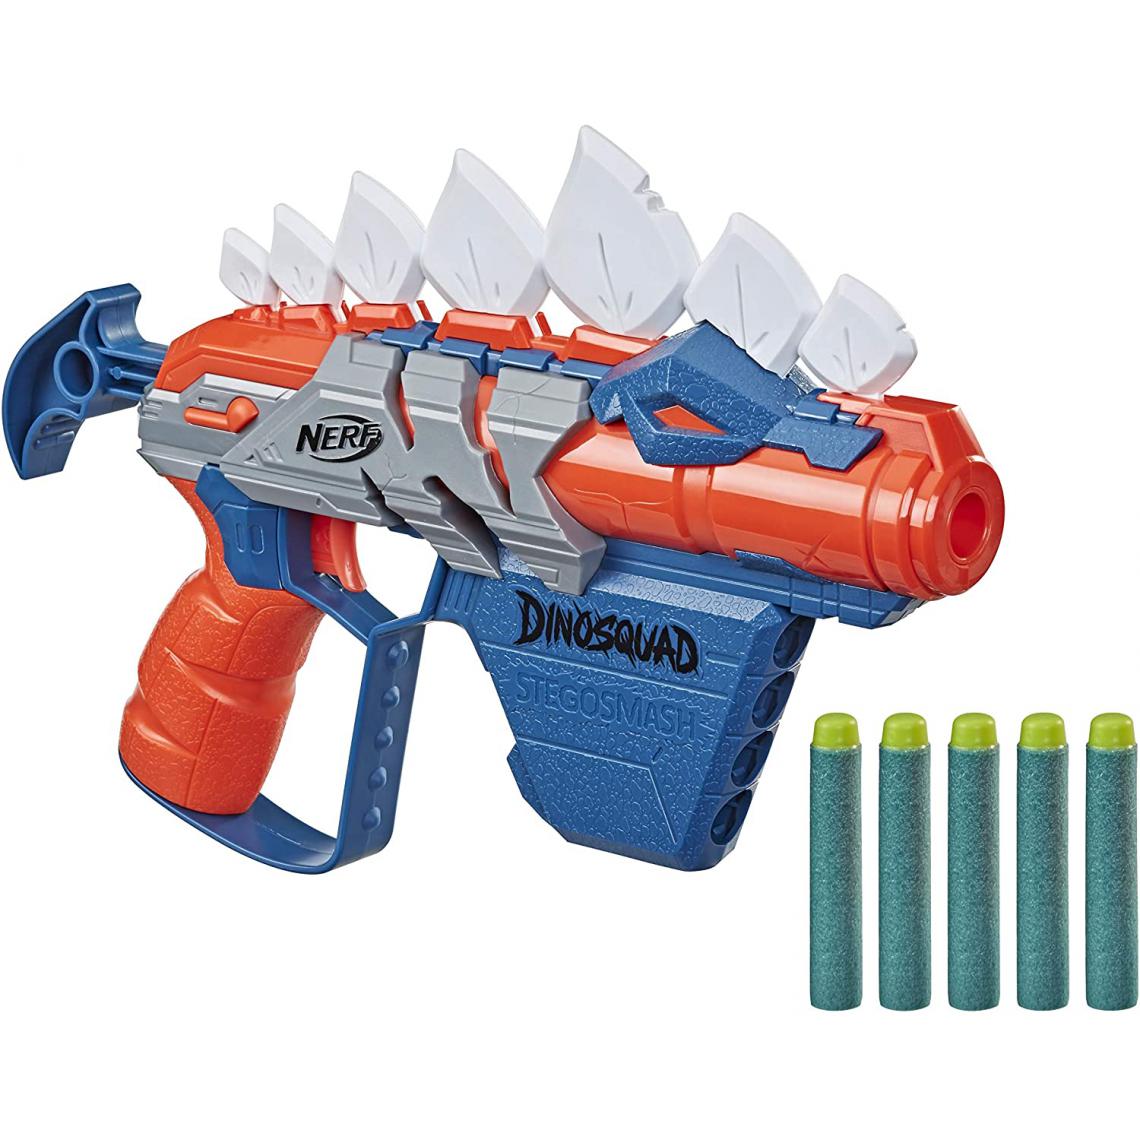 Nerf - pistolet dinoSquad Stegosmash et Flechettes Nerf Officielles bleu orange - Jeux d'adresse